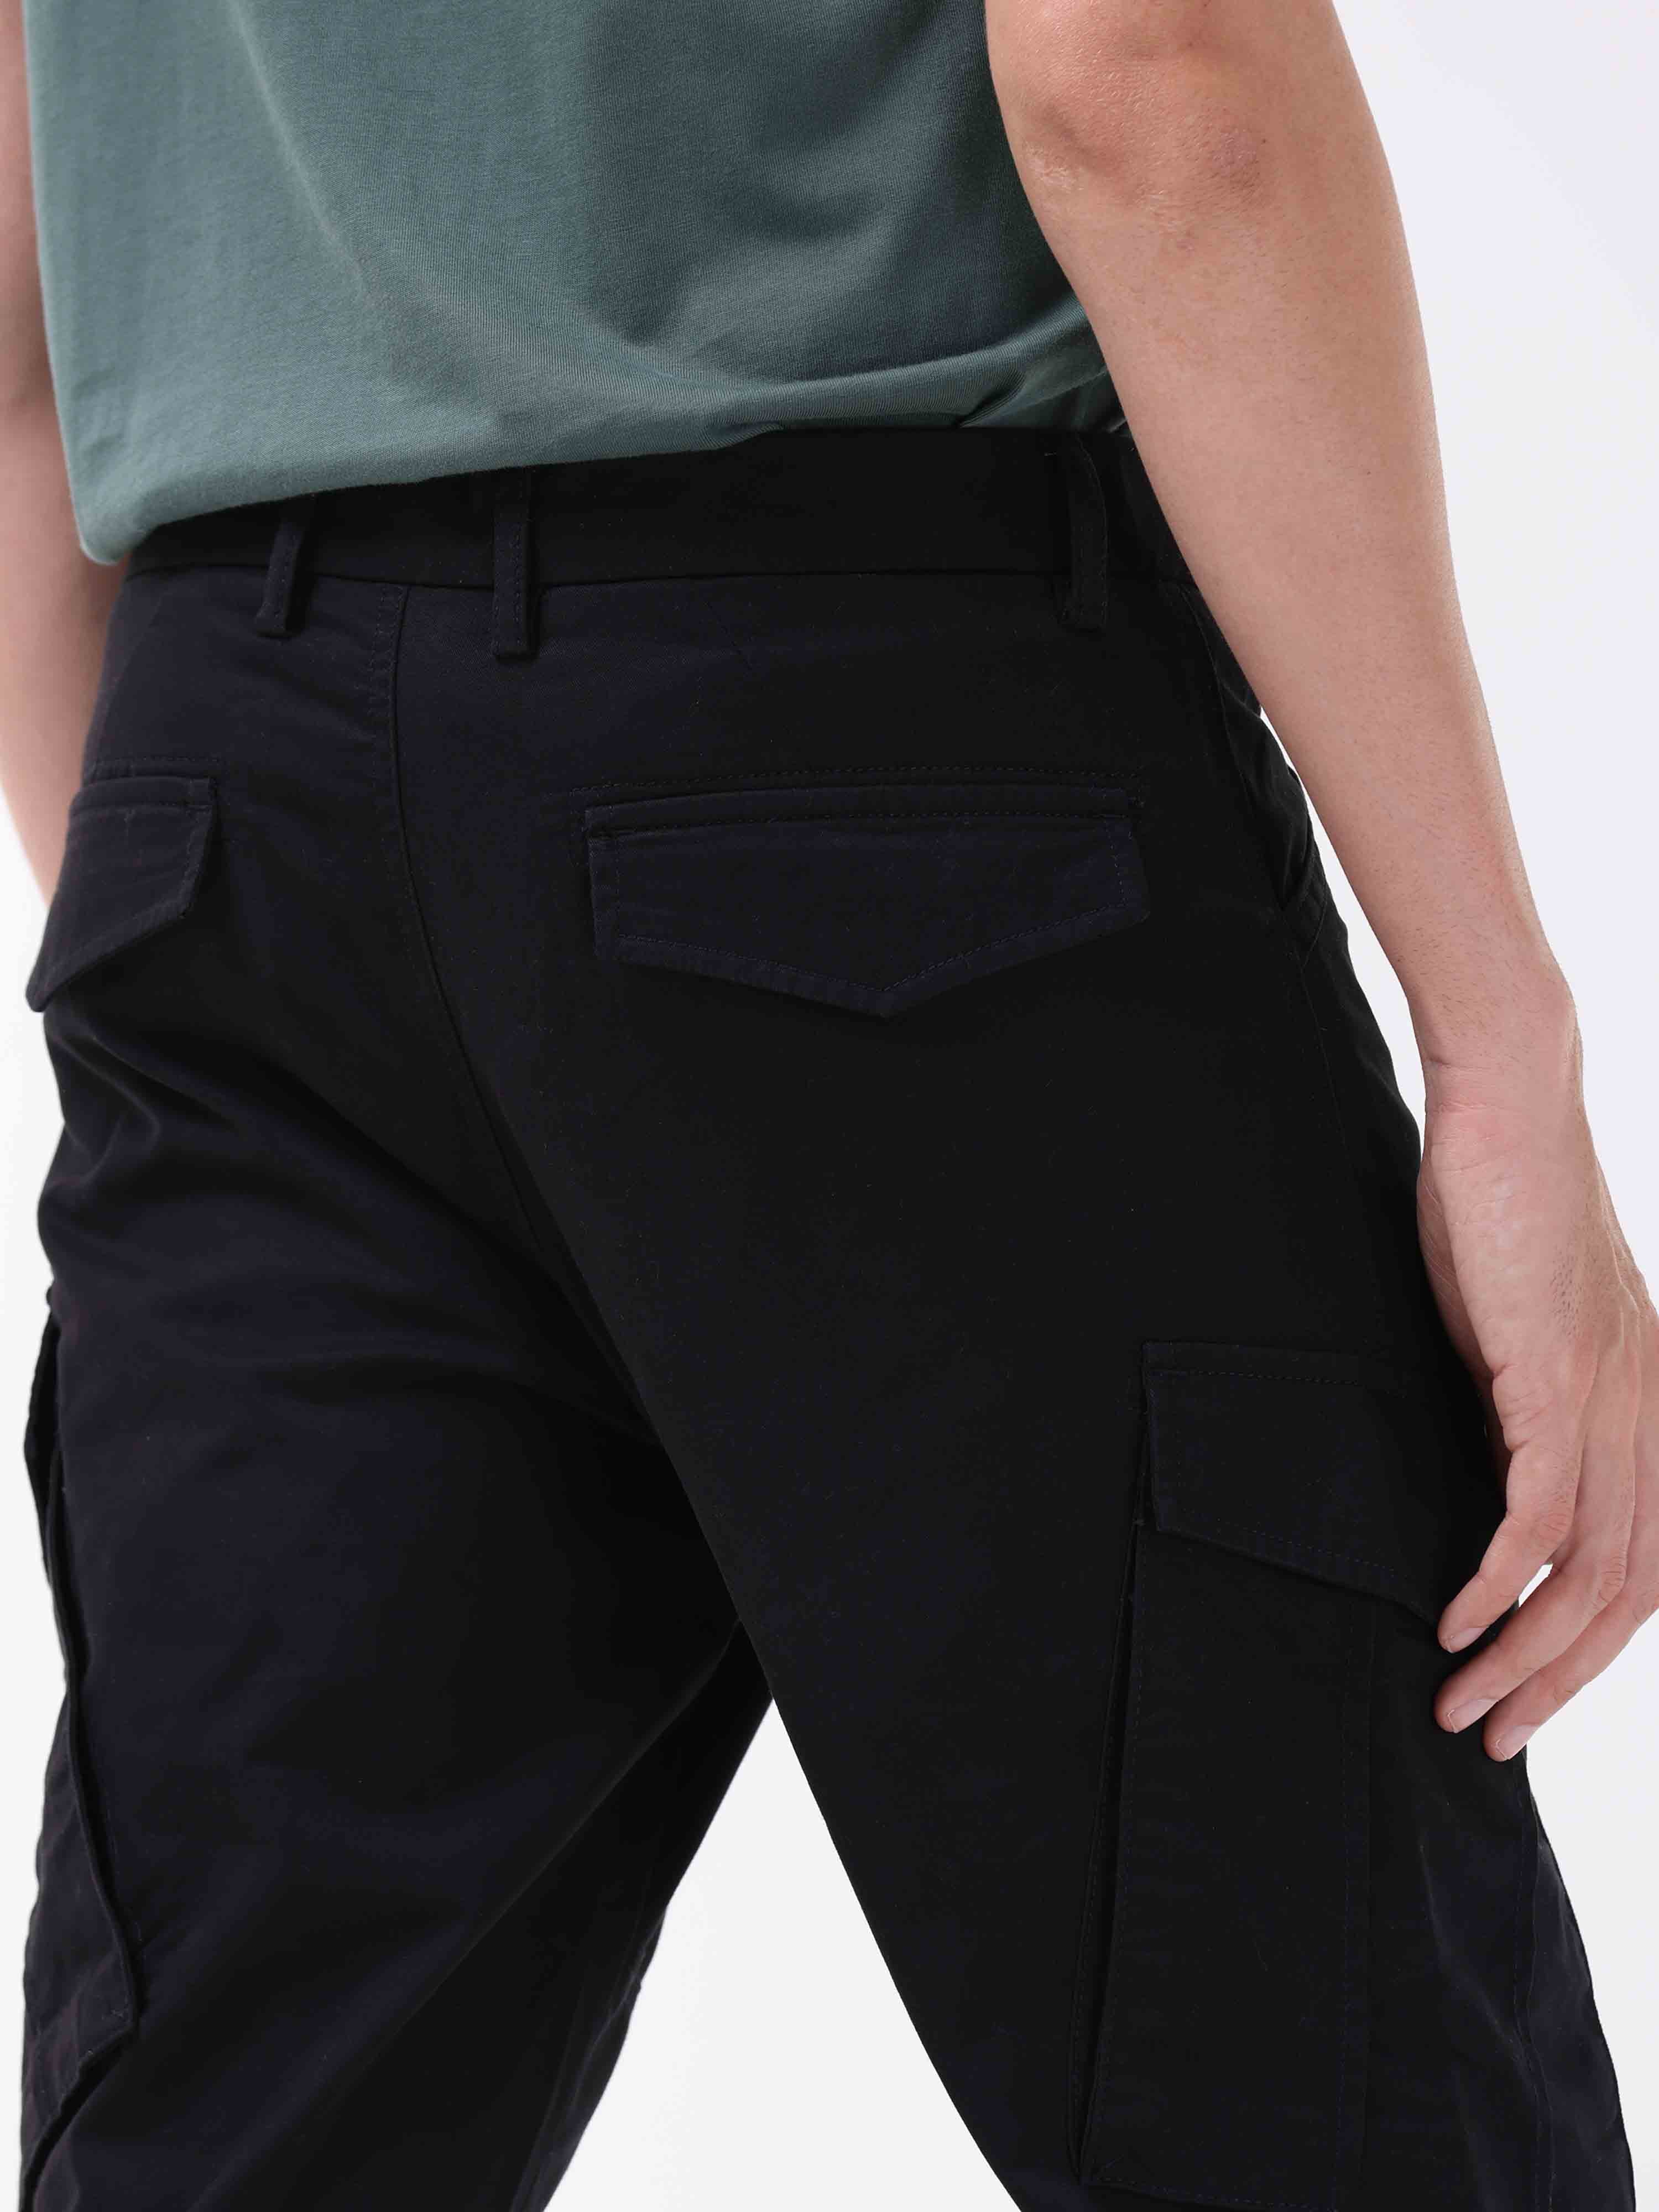 Buy HISEA Men's Tactical Pants with Tactical Belt Rip-Stop Cargo Pants  Water Resistant Outdoor Hiking Work Pants, Khaki, 38W x 30L at Amazon.in